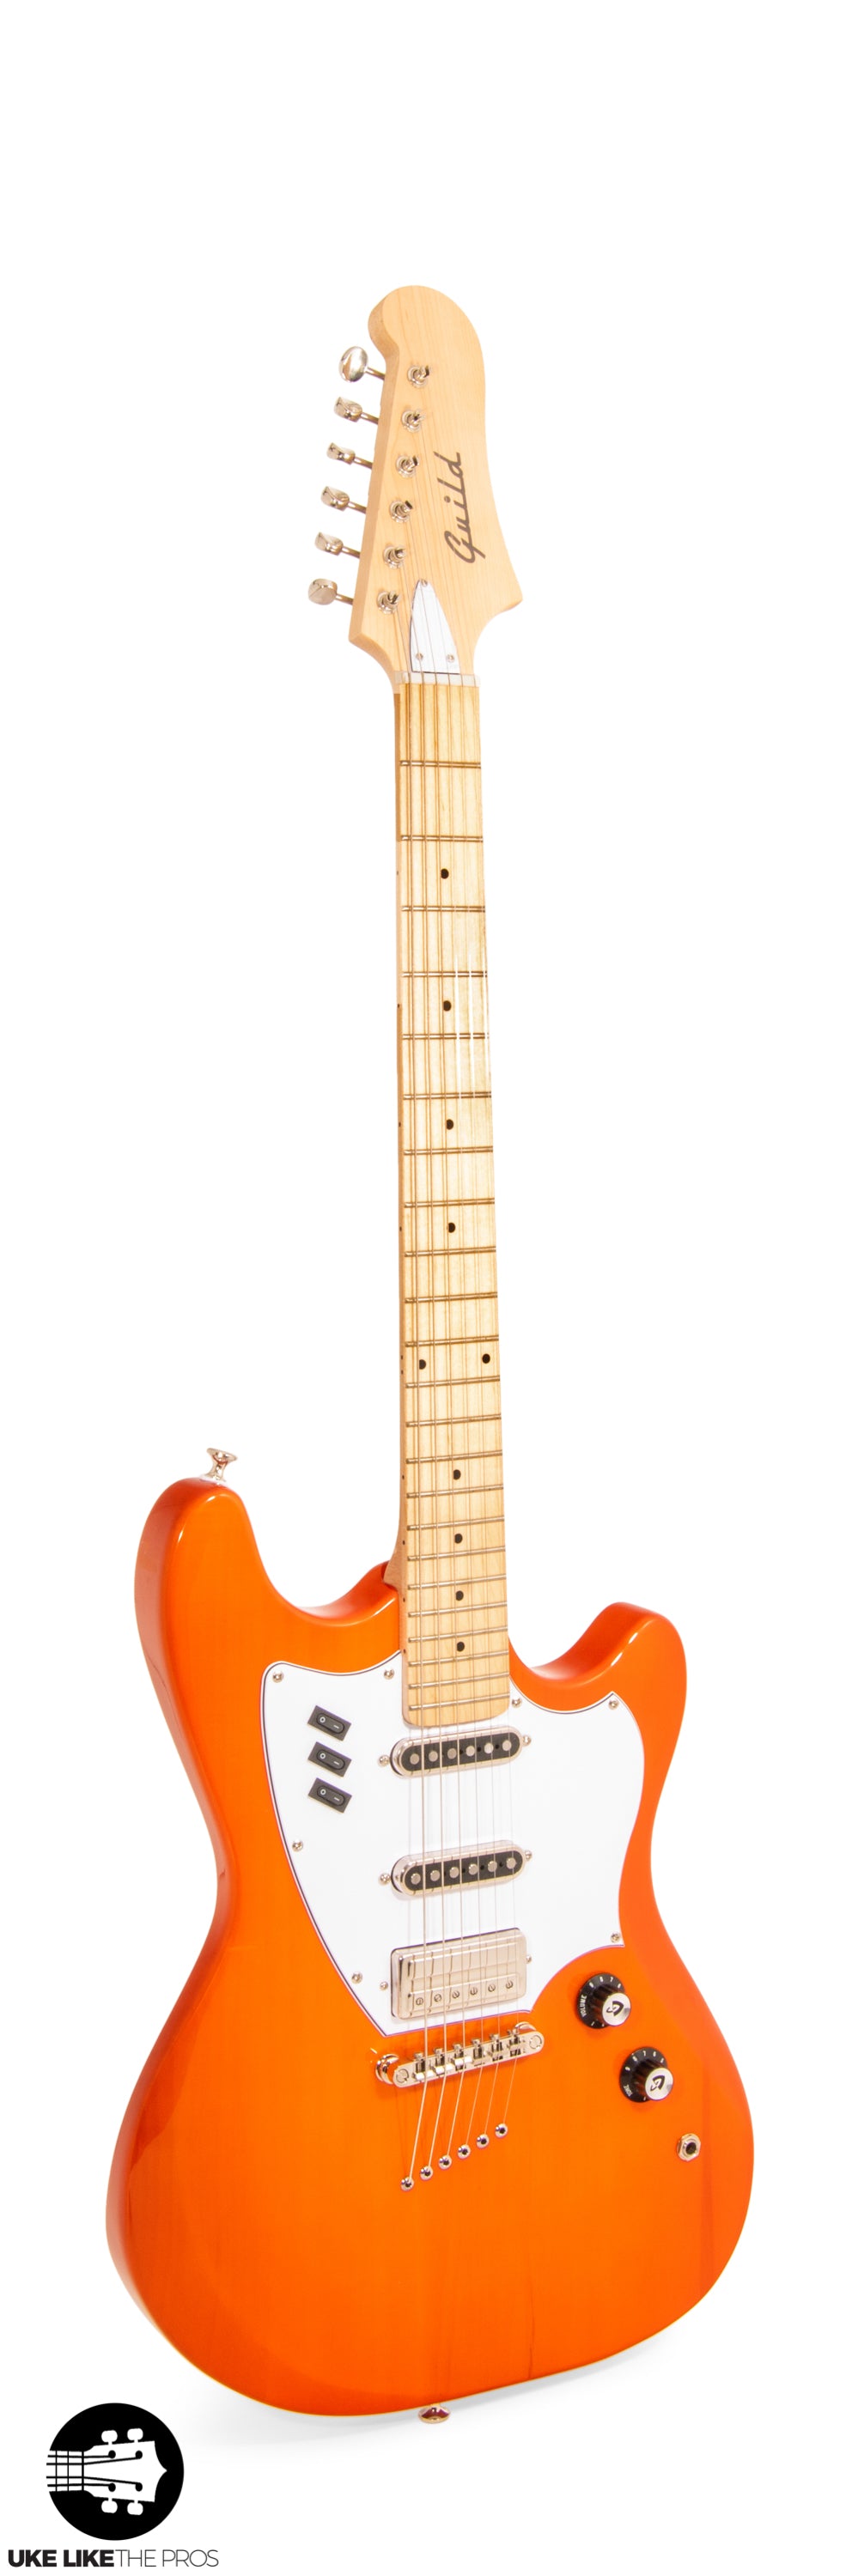 Guild Surfliner Electric Guitar Orange "Crazy Train"